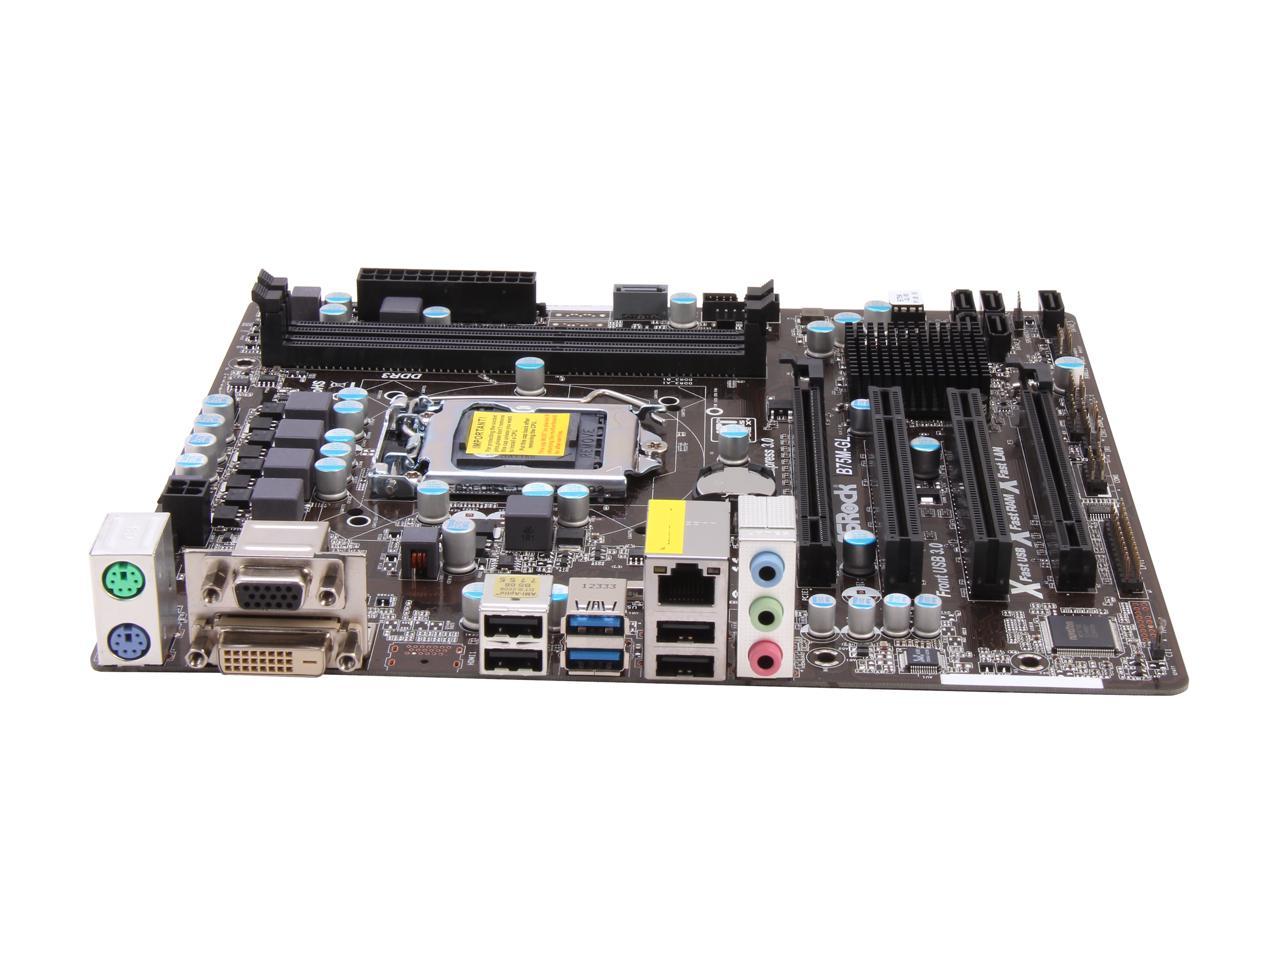 ASRock B75M-GL R2.0 LGA 1155 Micro ATX Intel Motherboard with UEFI BIOS